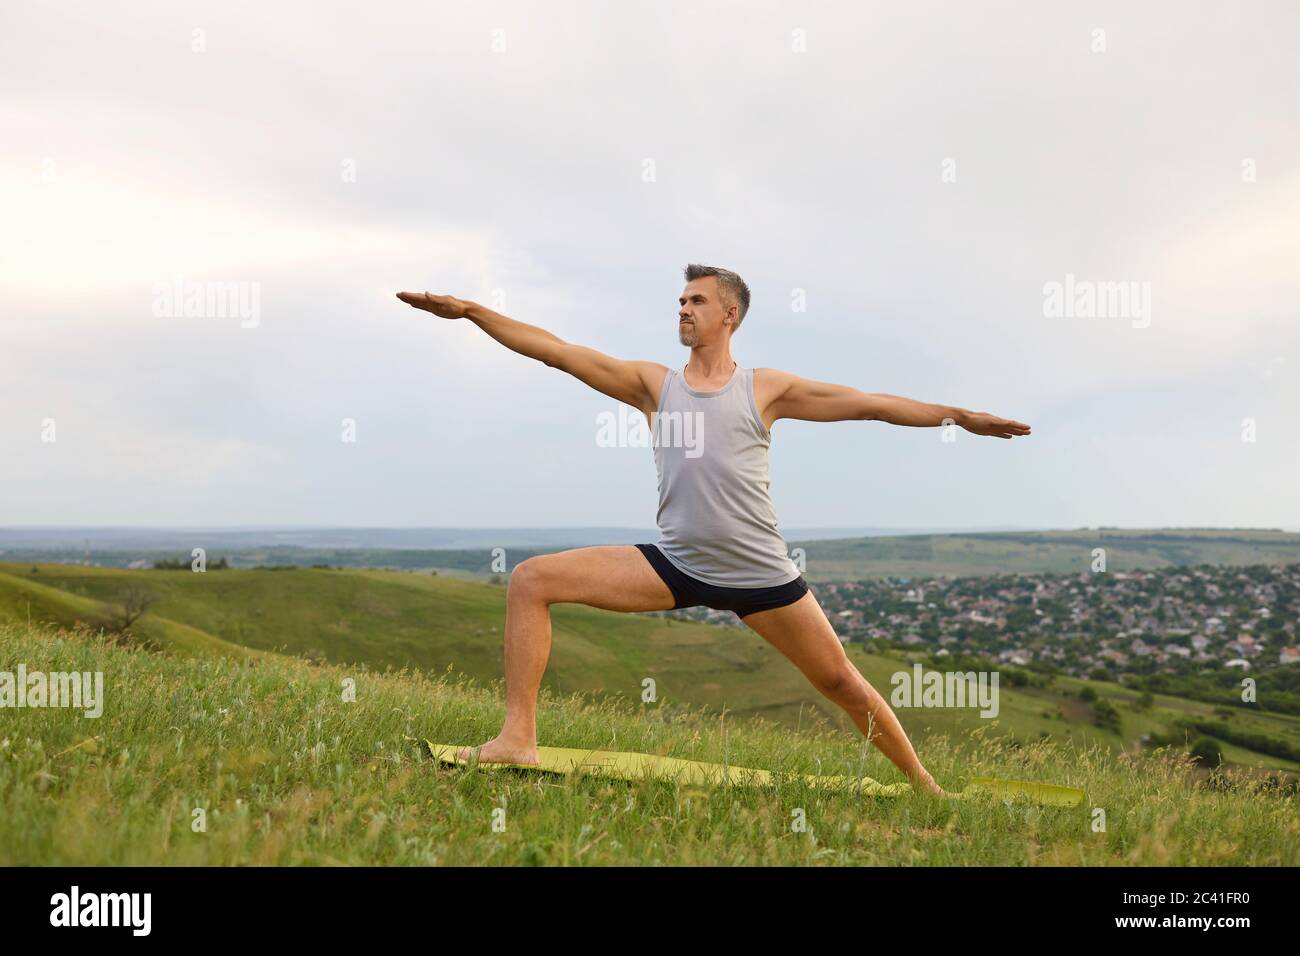 Reifer Mann tun Yoga Übung Valence auf grünem Gras in der Natur. Stockfoto